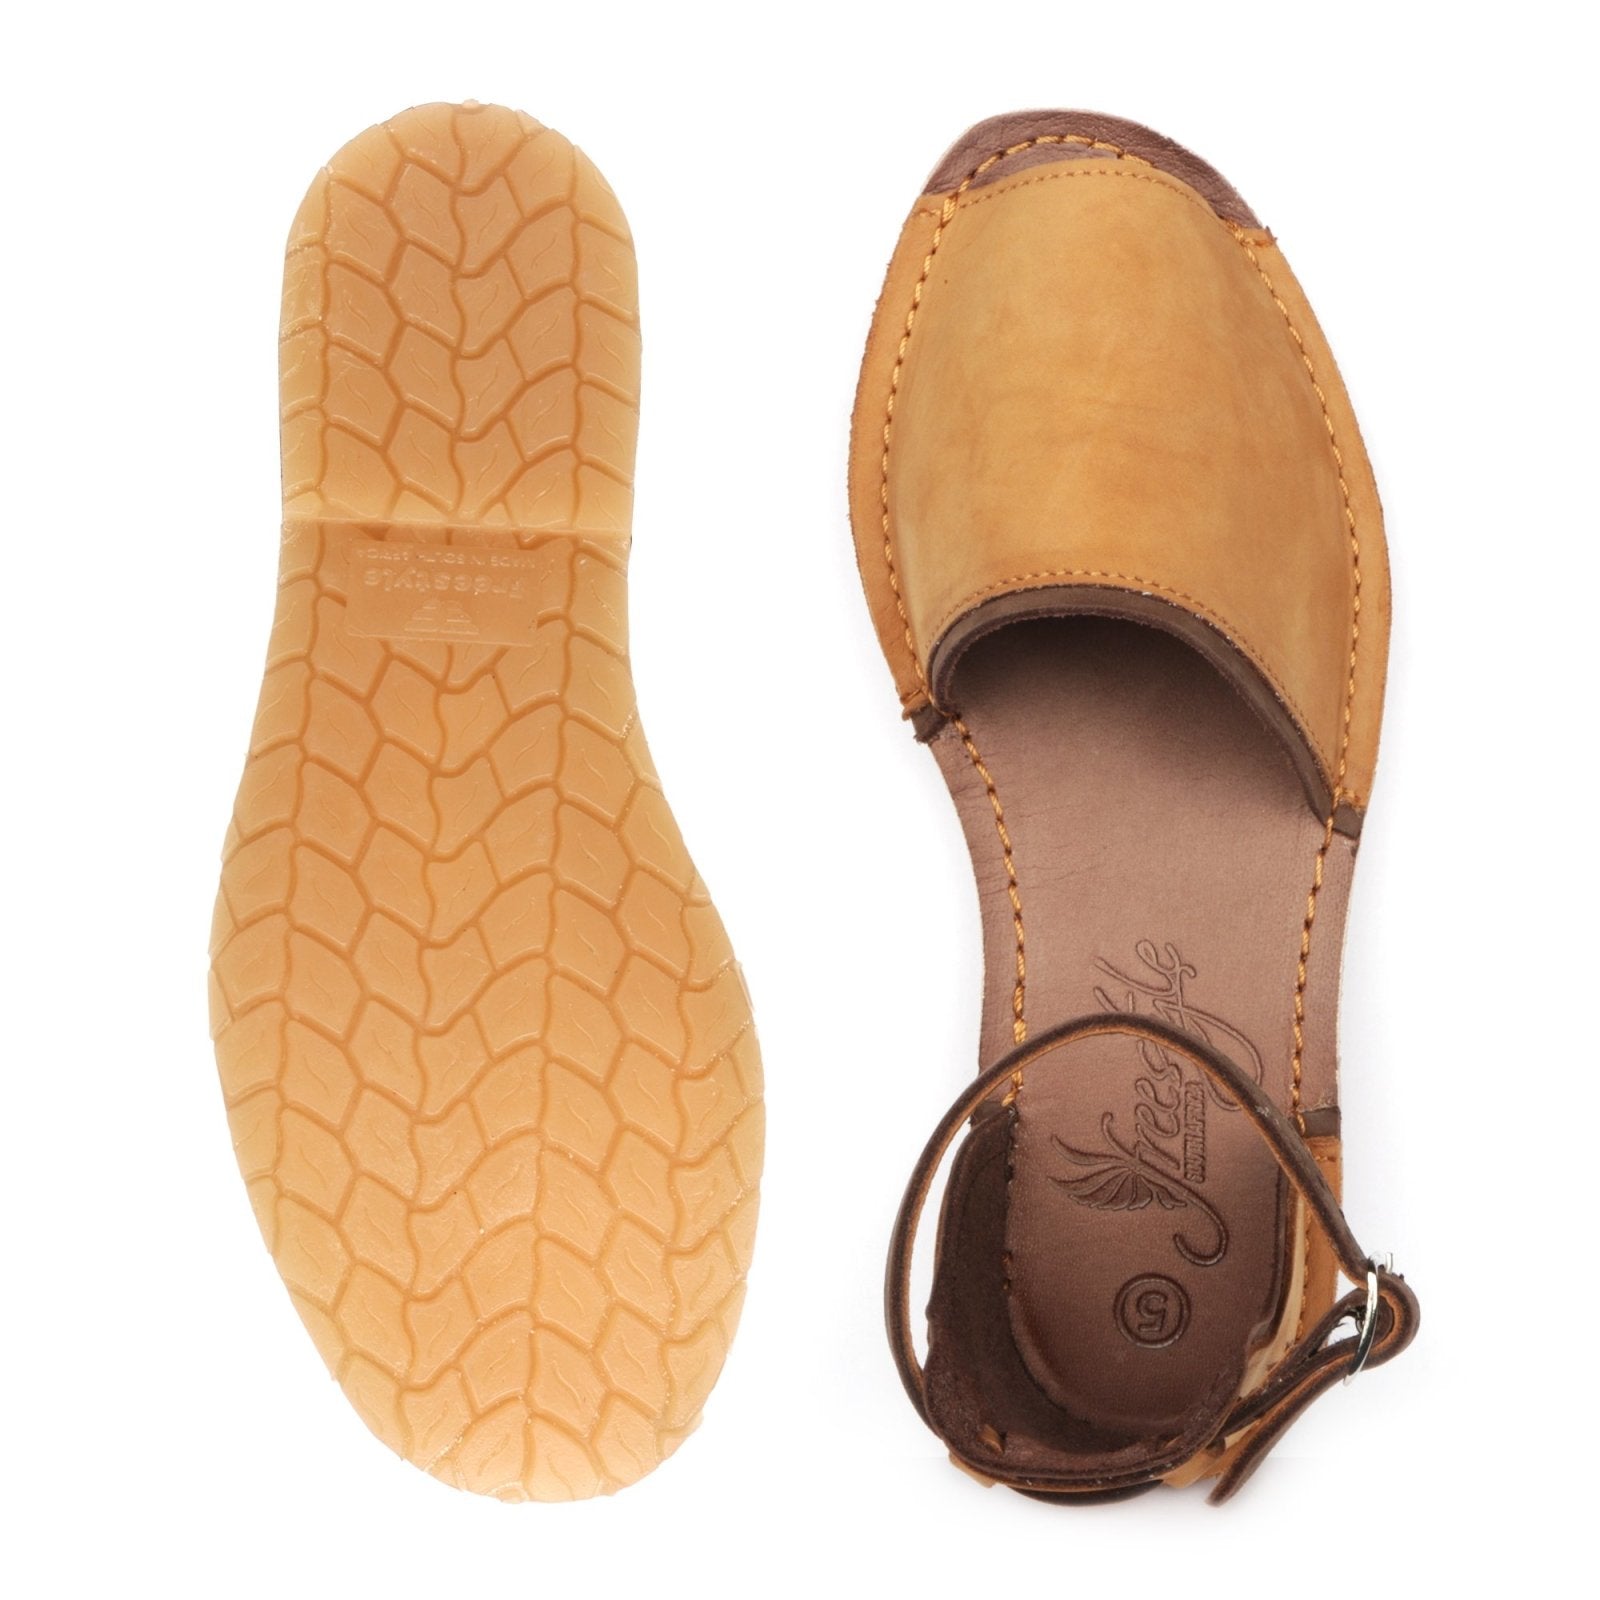 Rivera Alpargata-styled Premium nubuck leather ladies sandal - Freestyle SA Proudly local leather boots veldskoens vellies leather shoes suede veldskoens